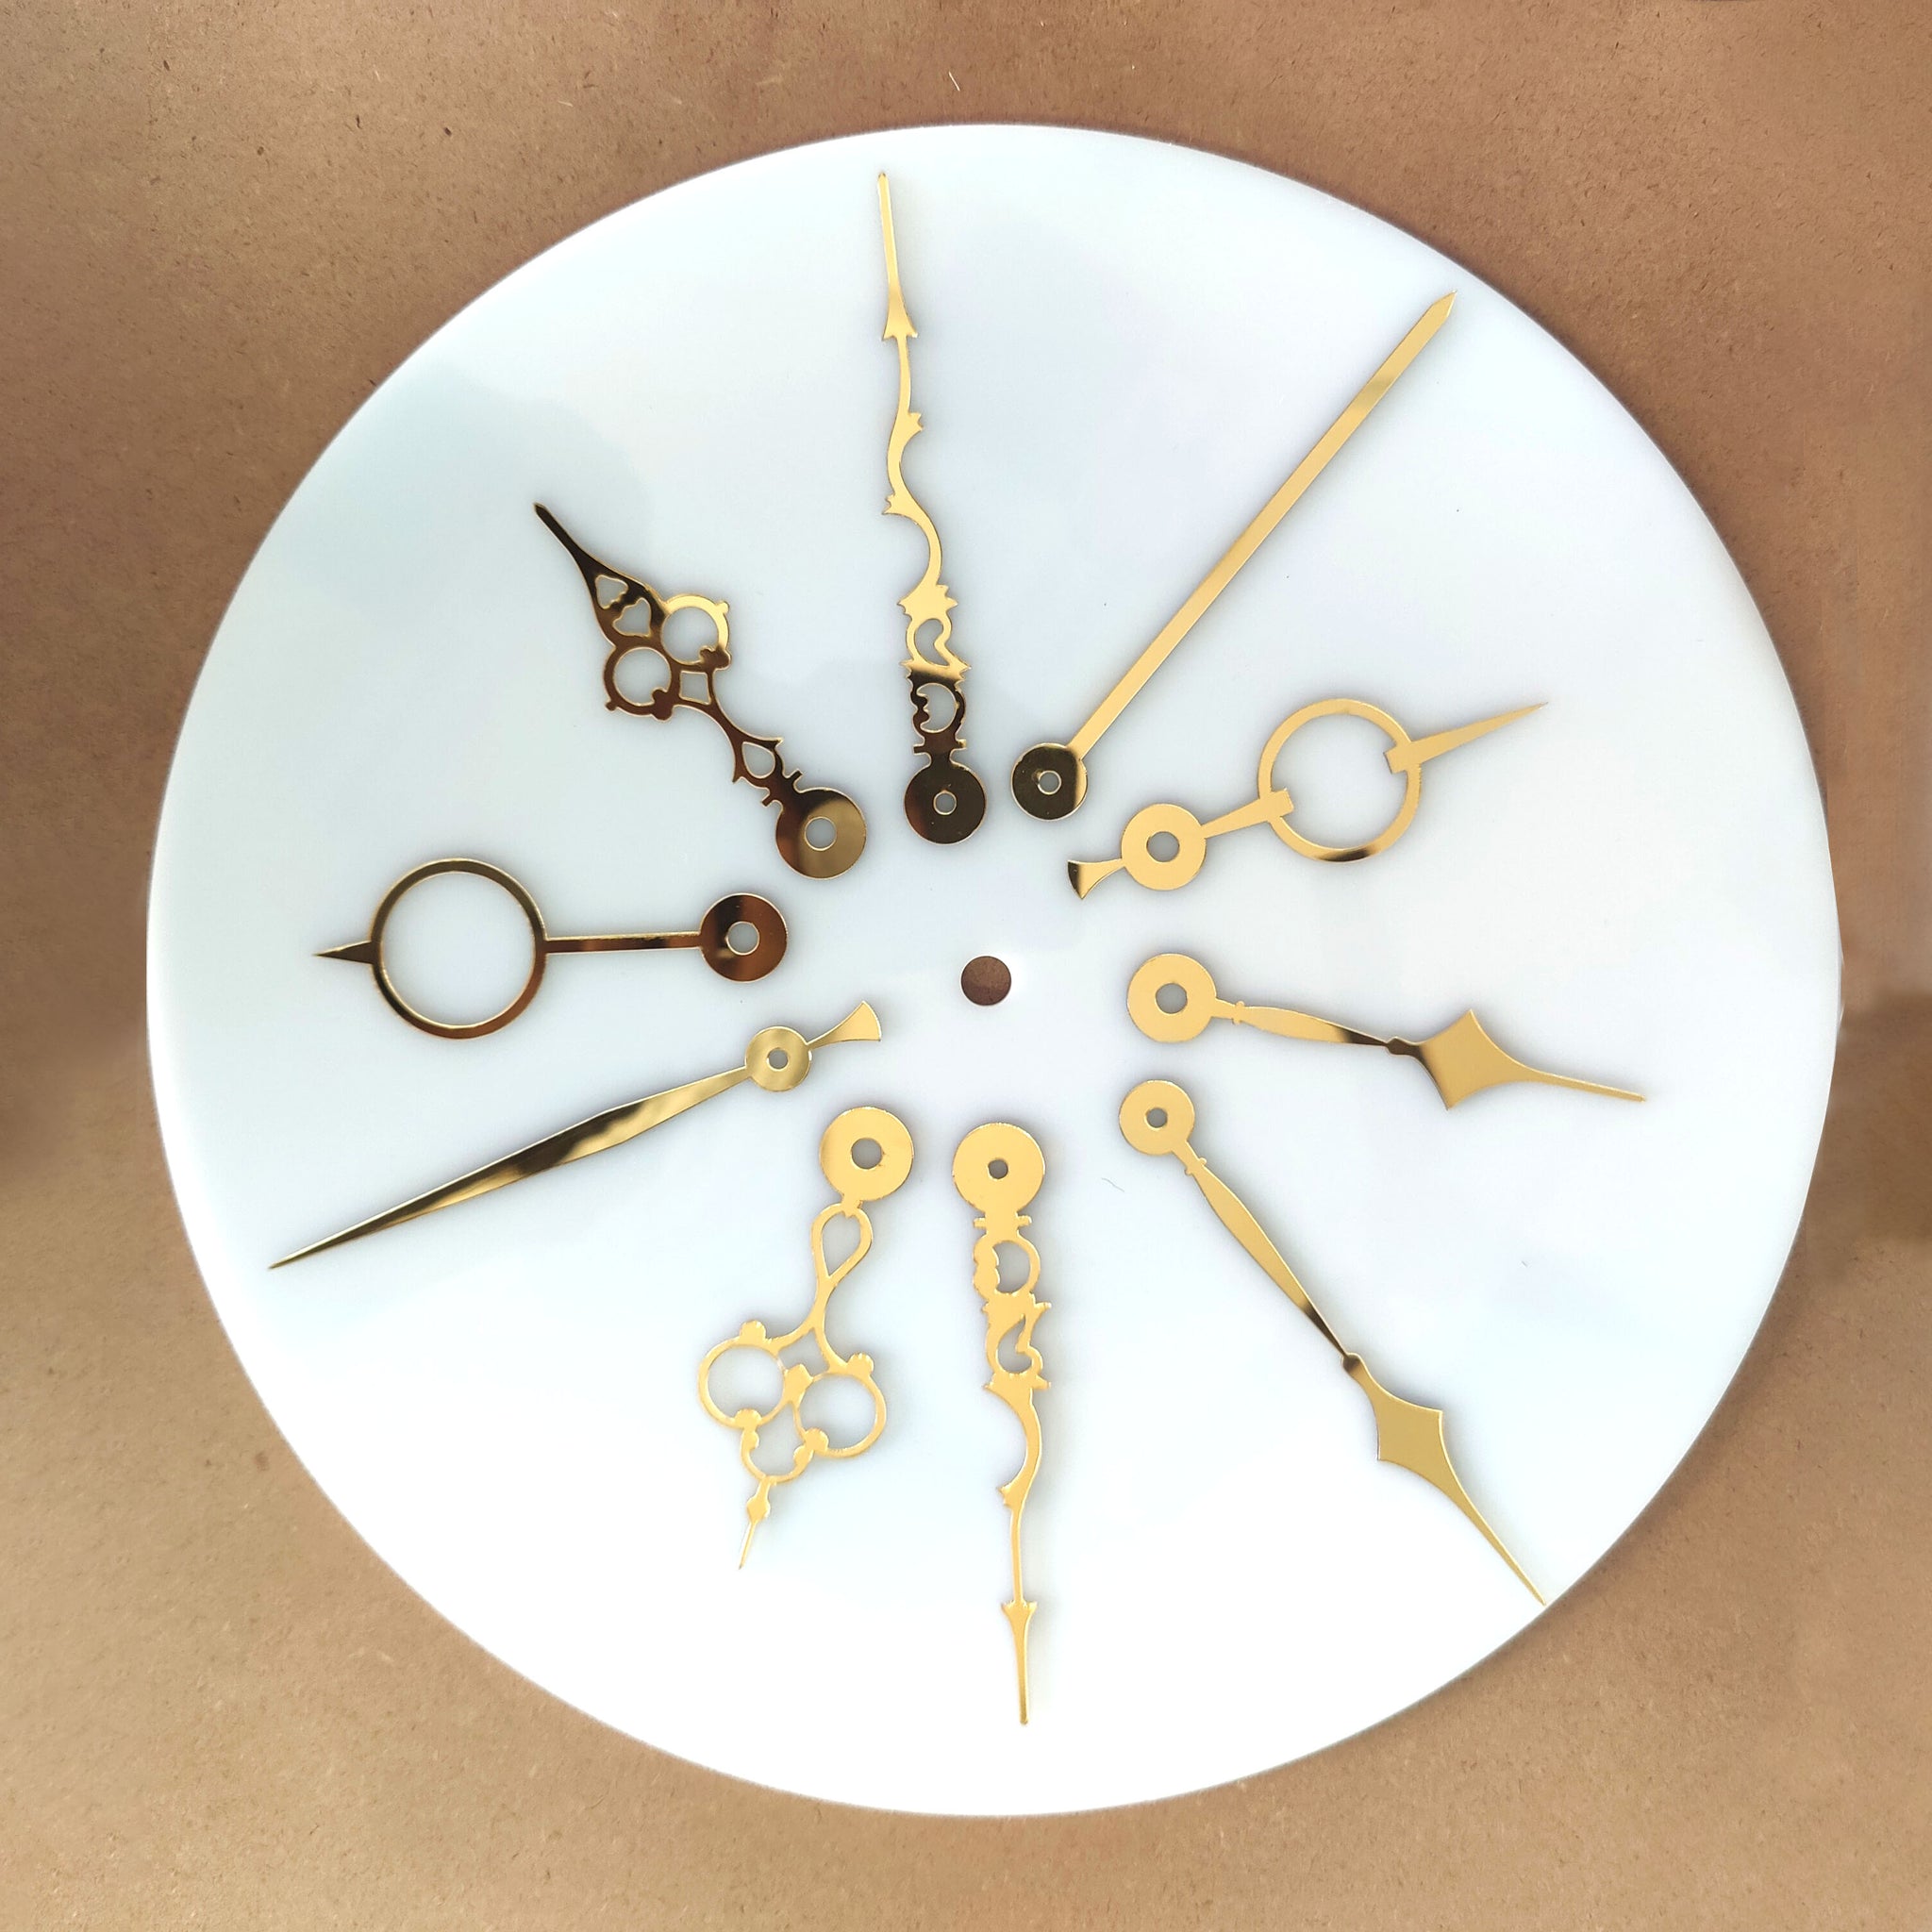 Acrylic Clock Hands